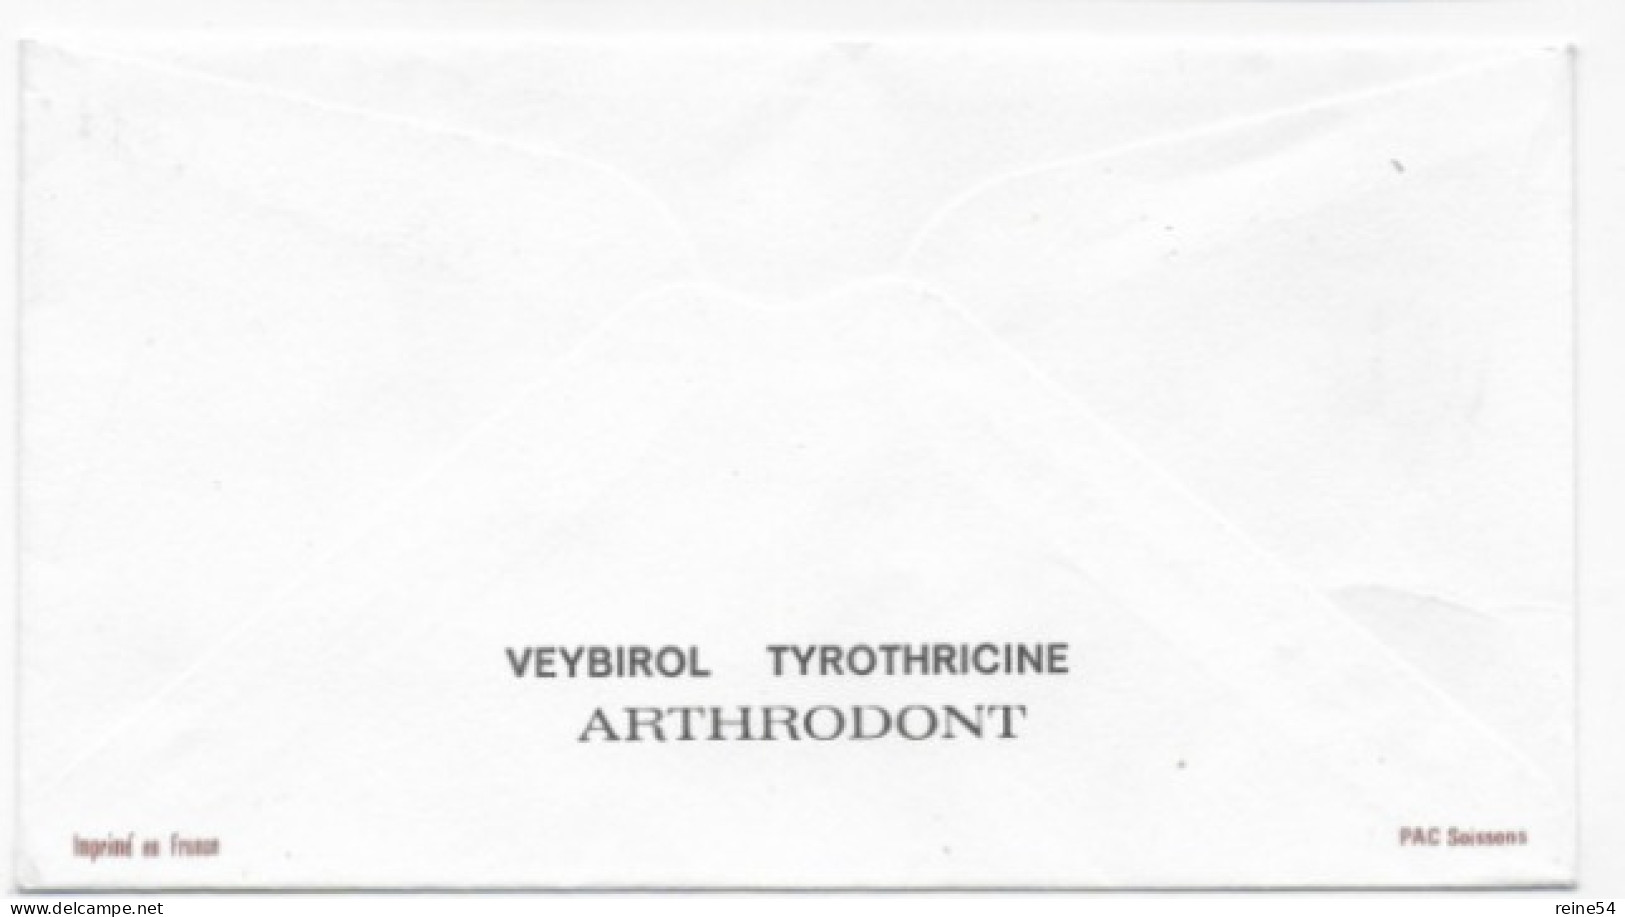 Enveloppe Premier Jour - Ulrie Zwingli 18-09-1969  Bern Ausgabetag  Helvetia (circulé) - Usados